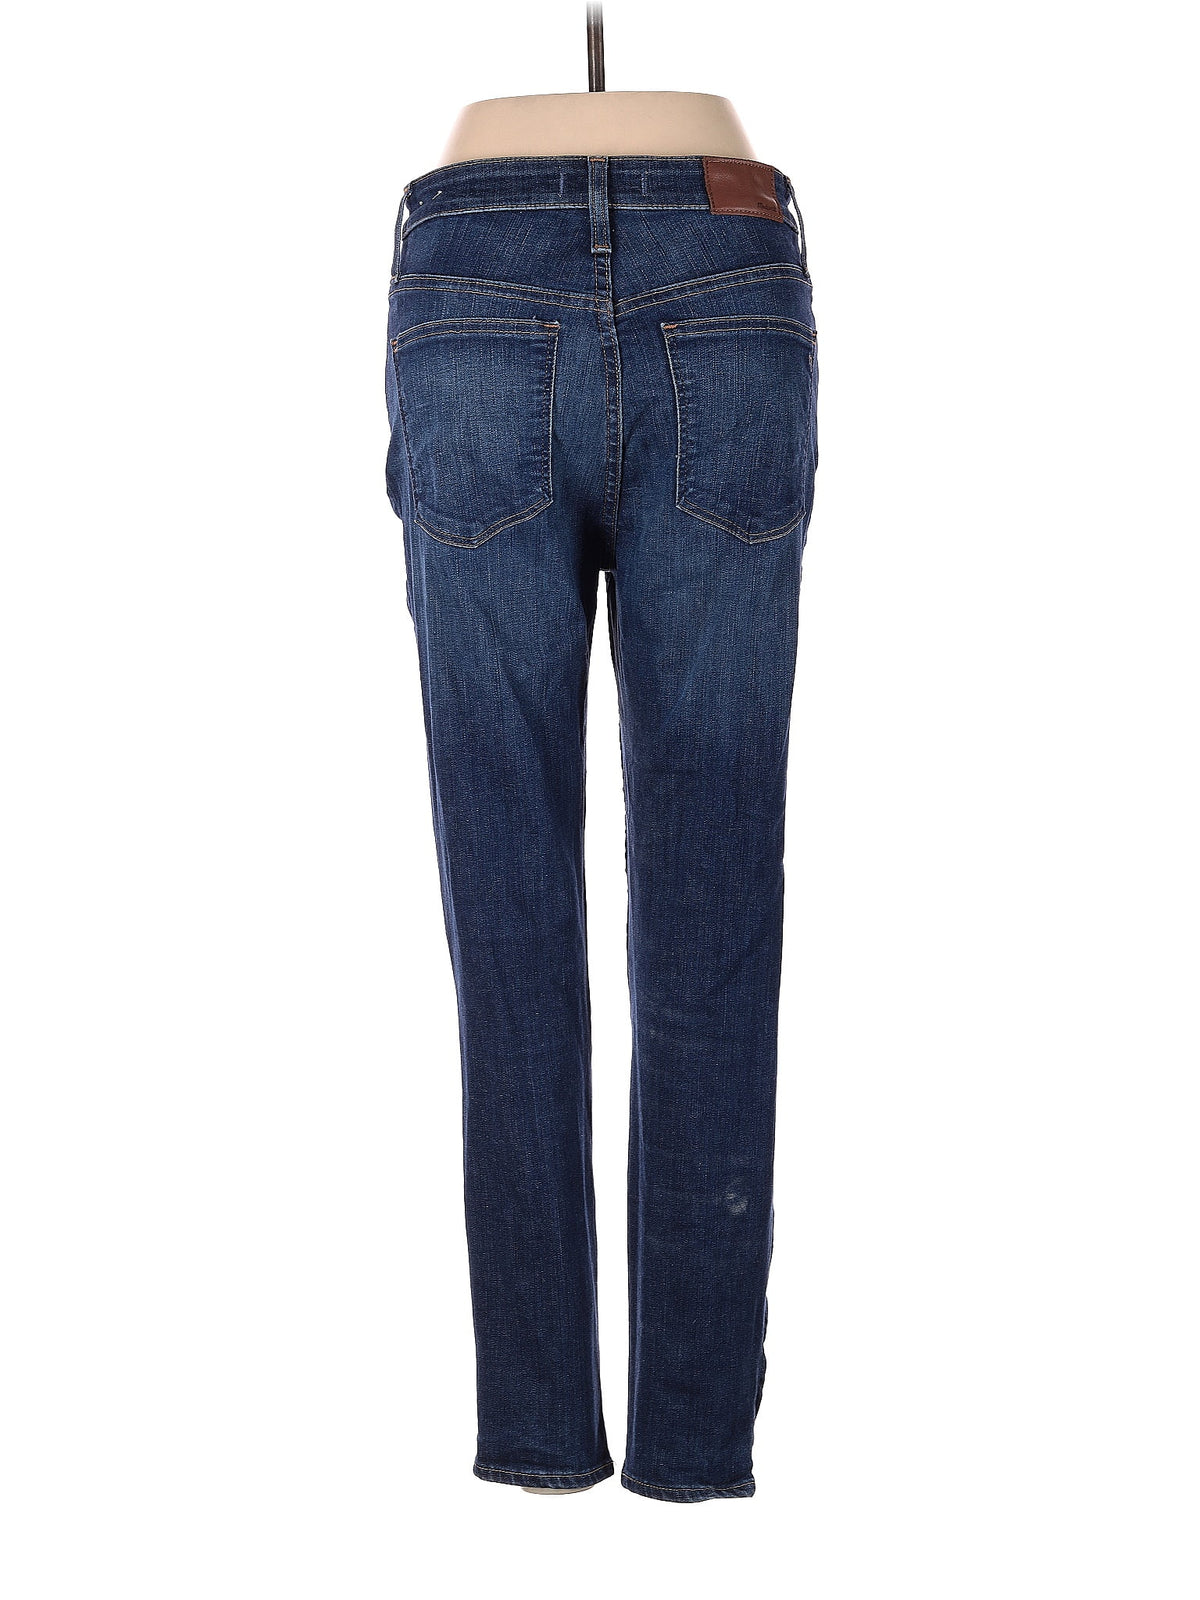 High-Rise Straight-leg Jeans in Medium Wash waist size - 29